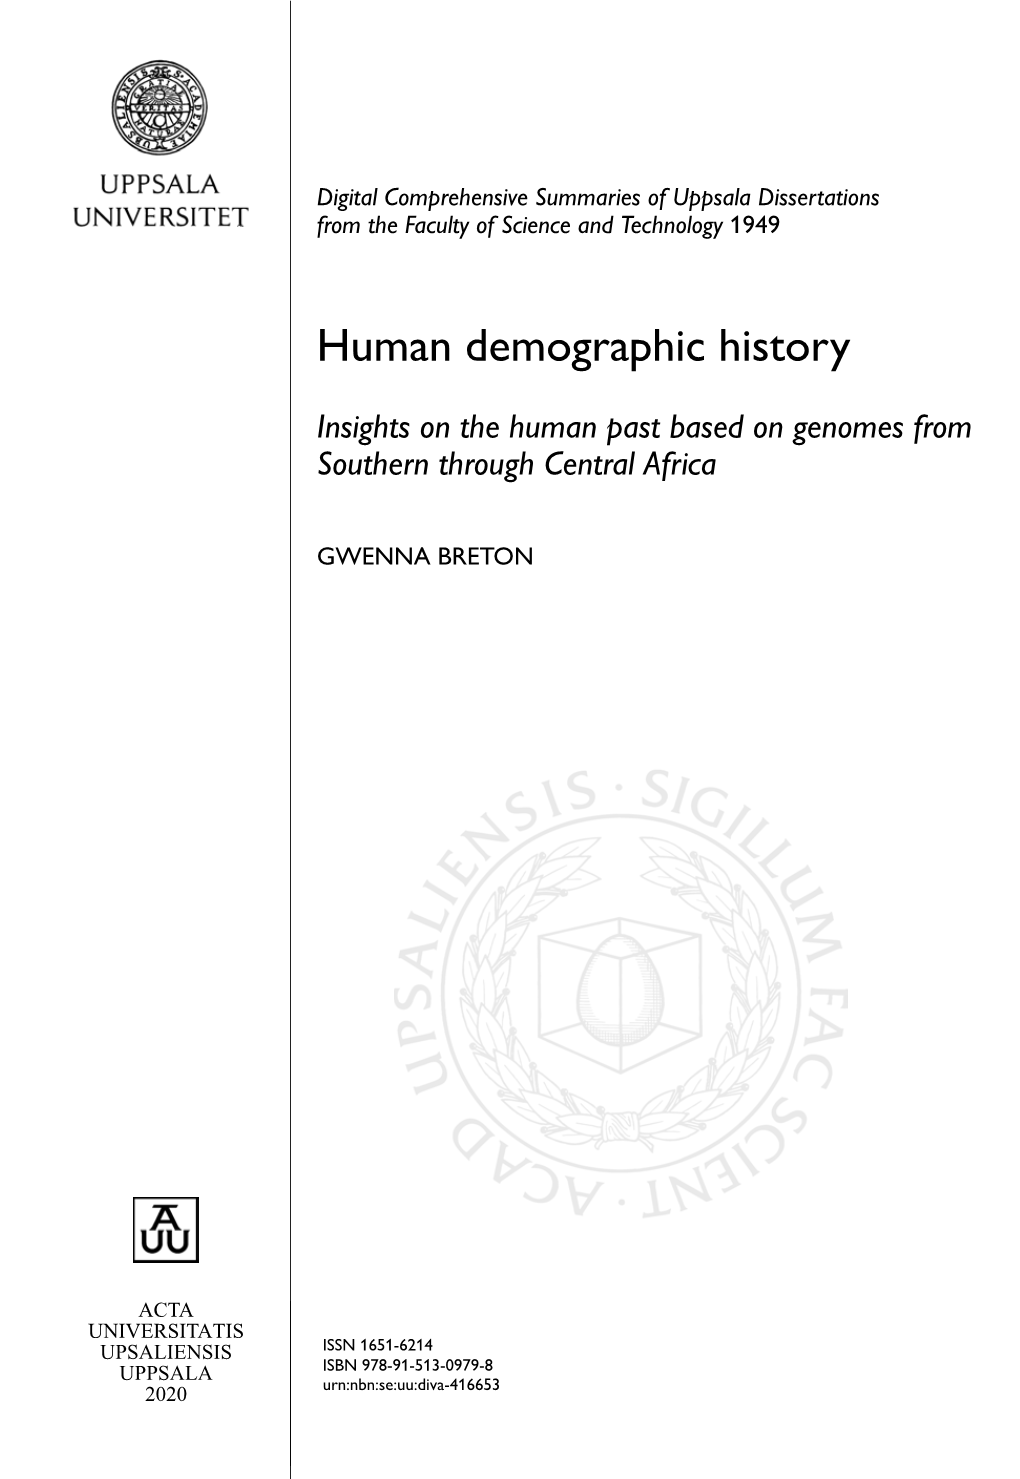 Human Demographic History